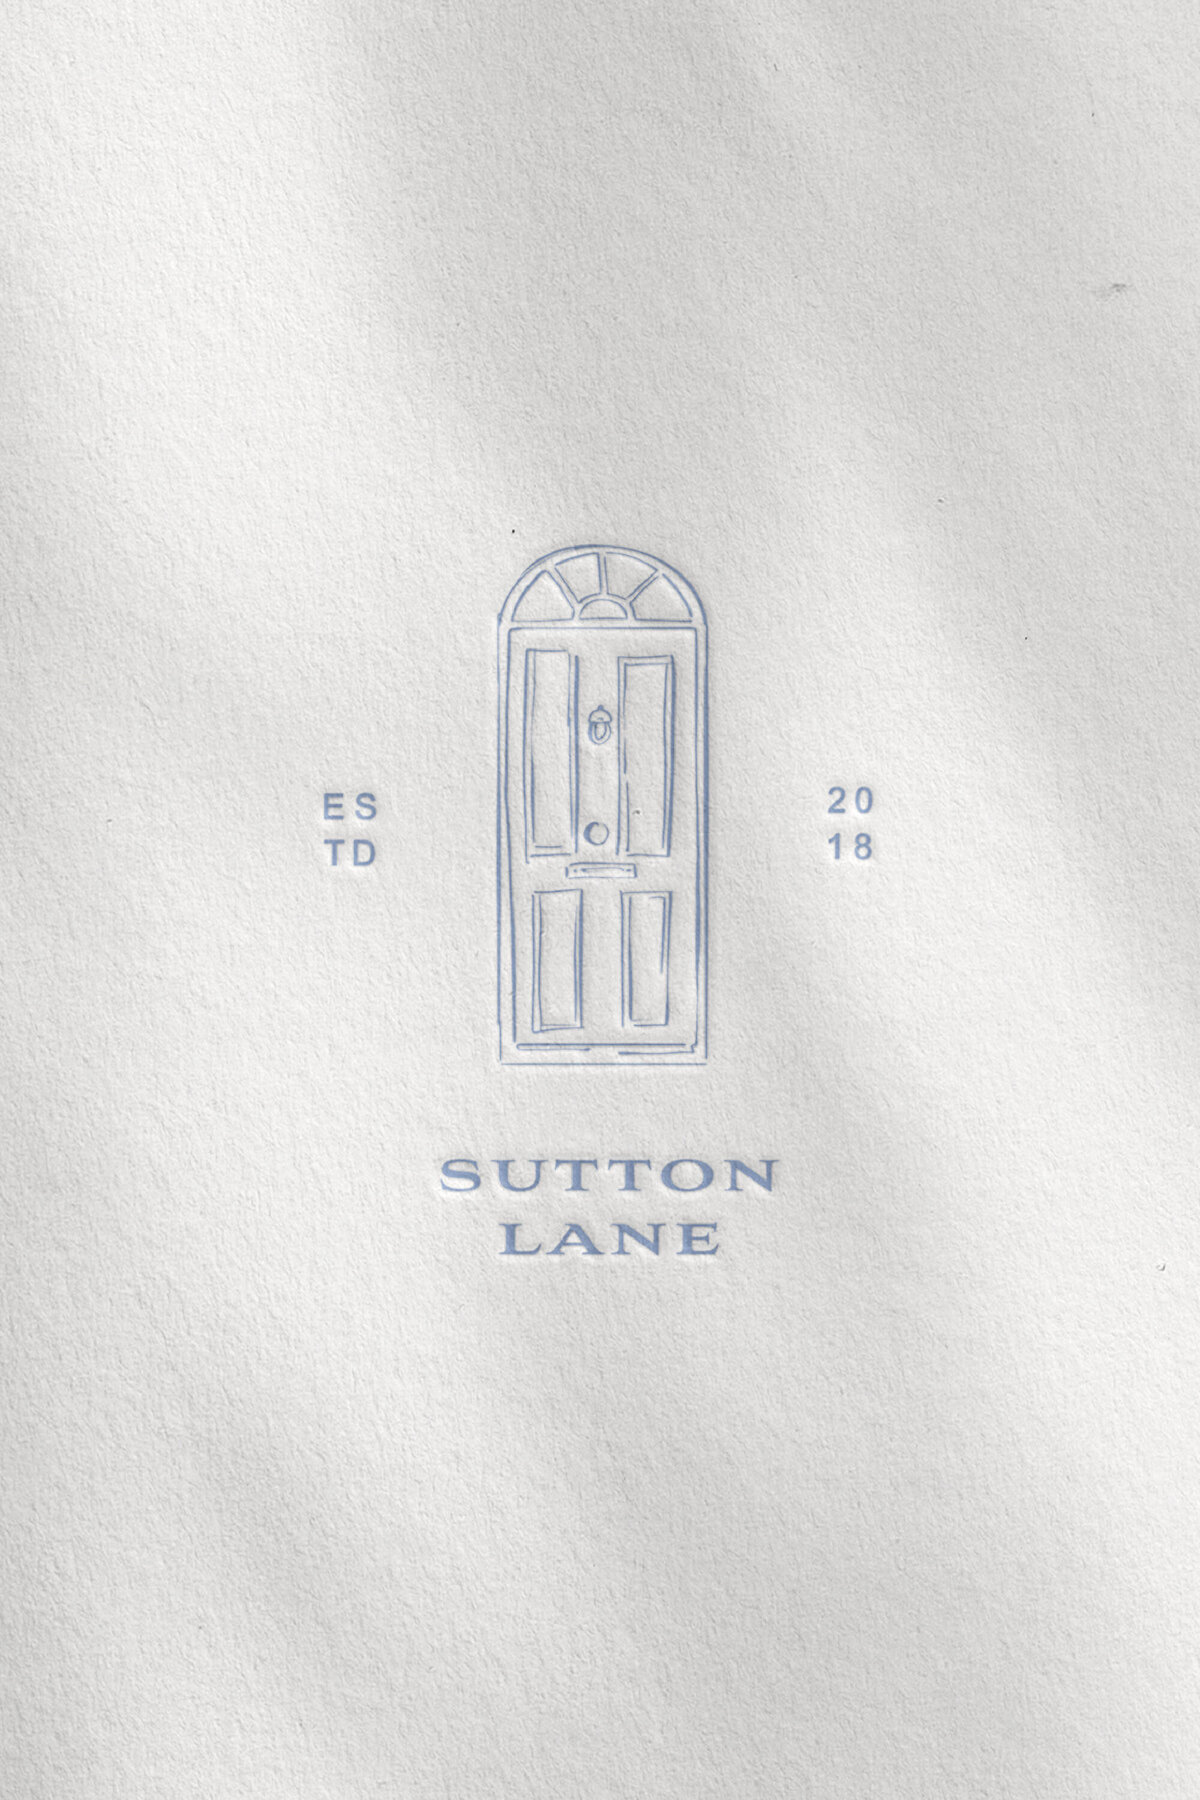 Sutton-Semi-Custom-Brand-Logo-9